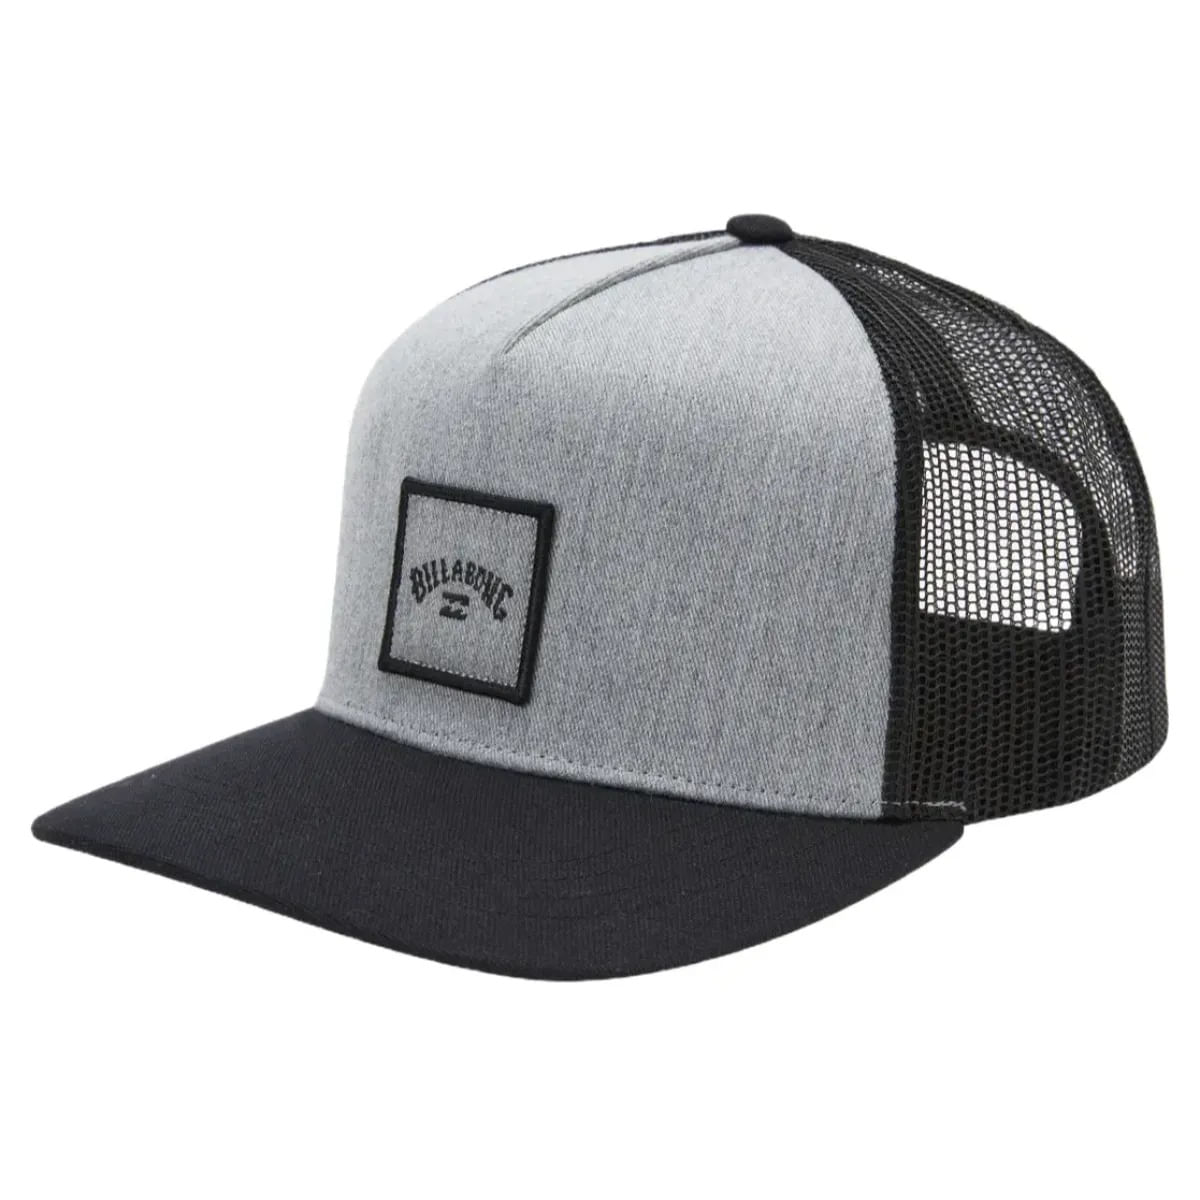 Stacked - Snapback Hat for Men